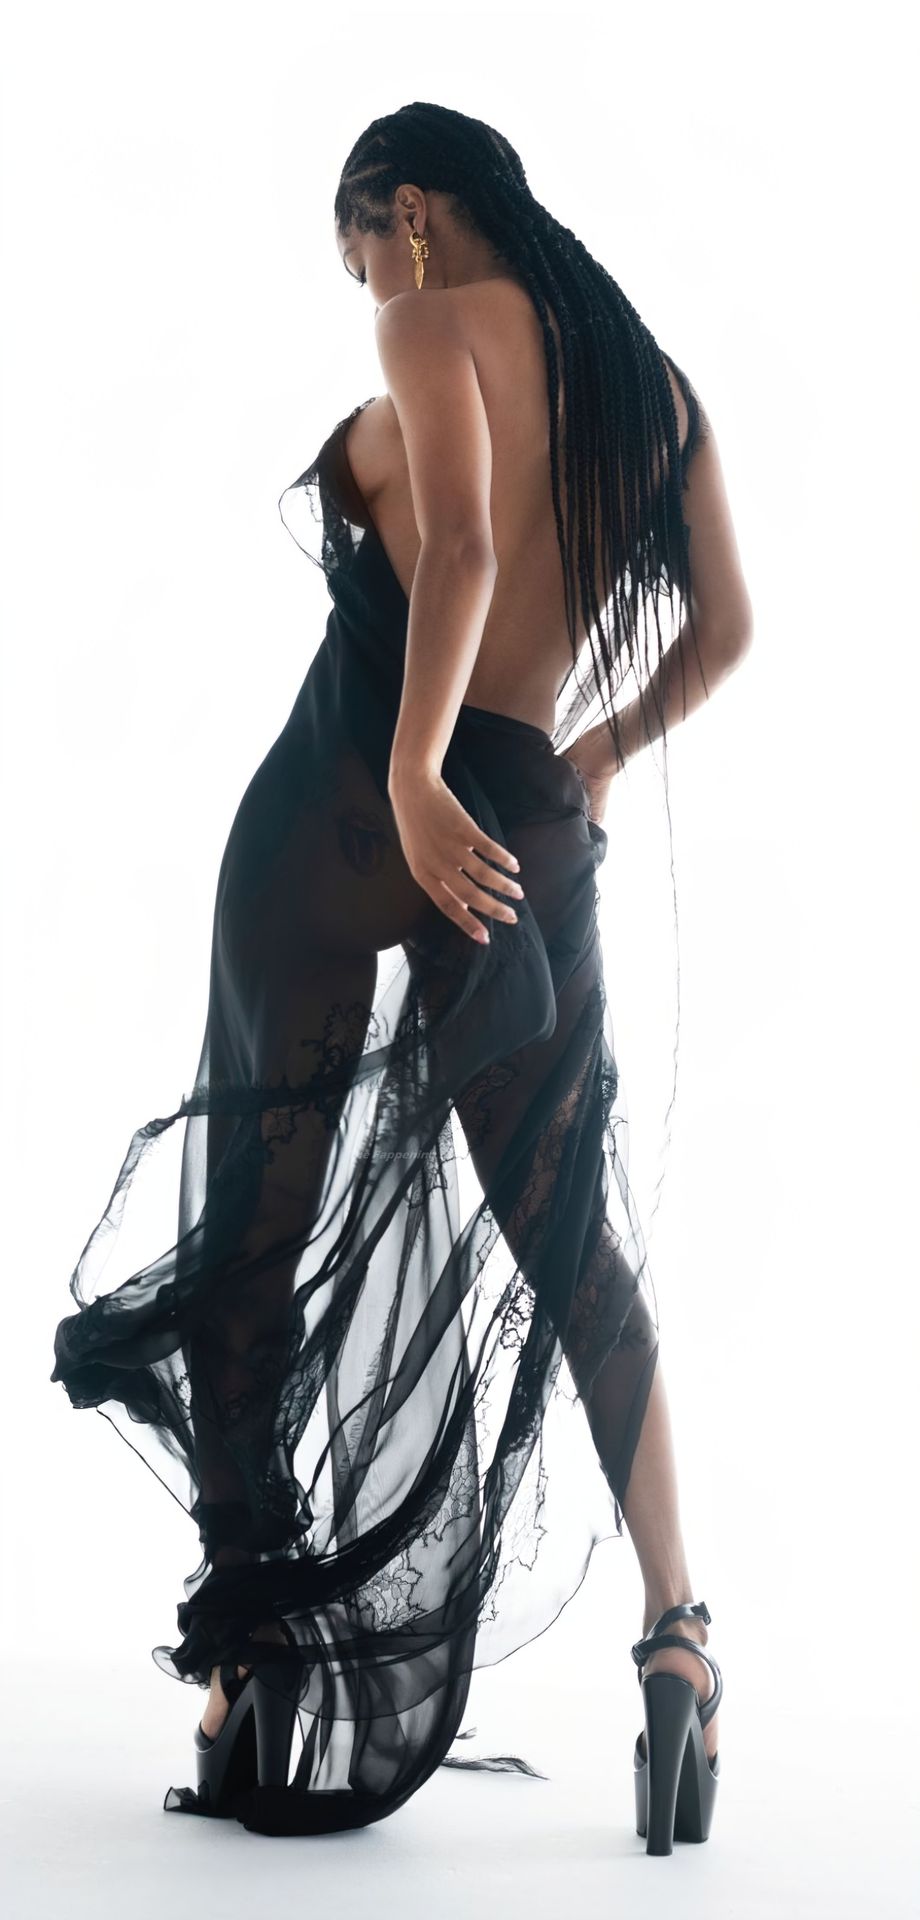 Teyana Taylor Sexy  - Maxim Magazine (17 Photos)